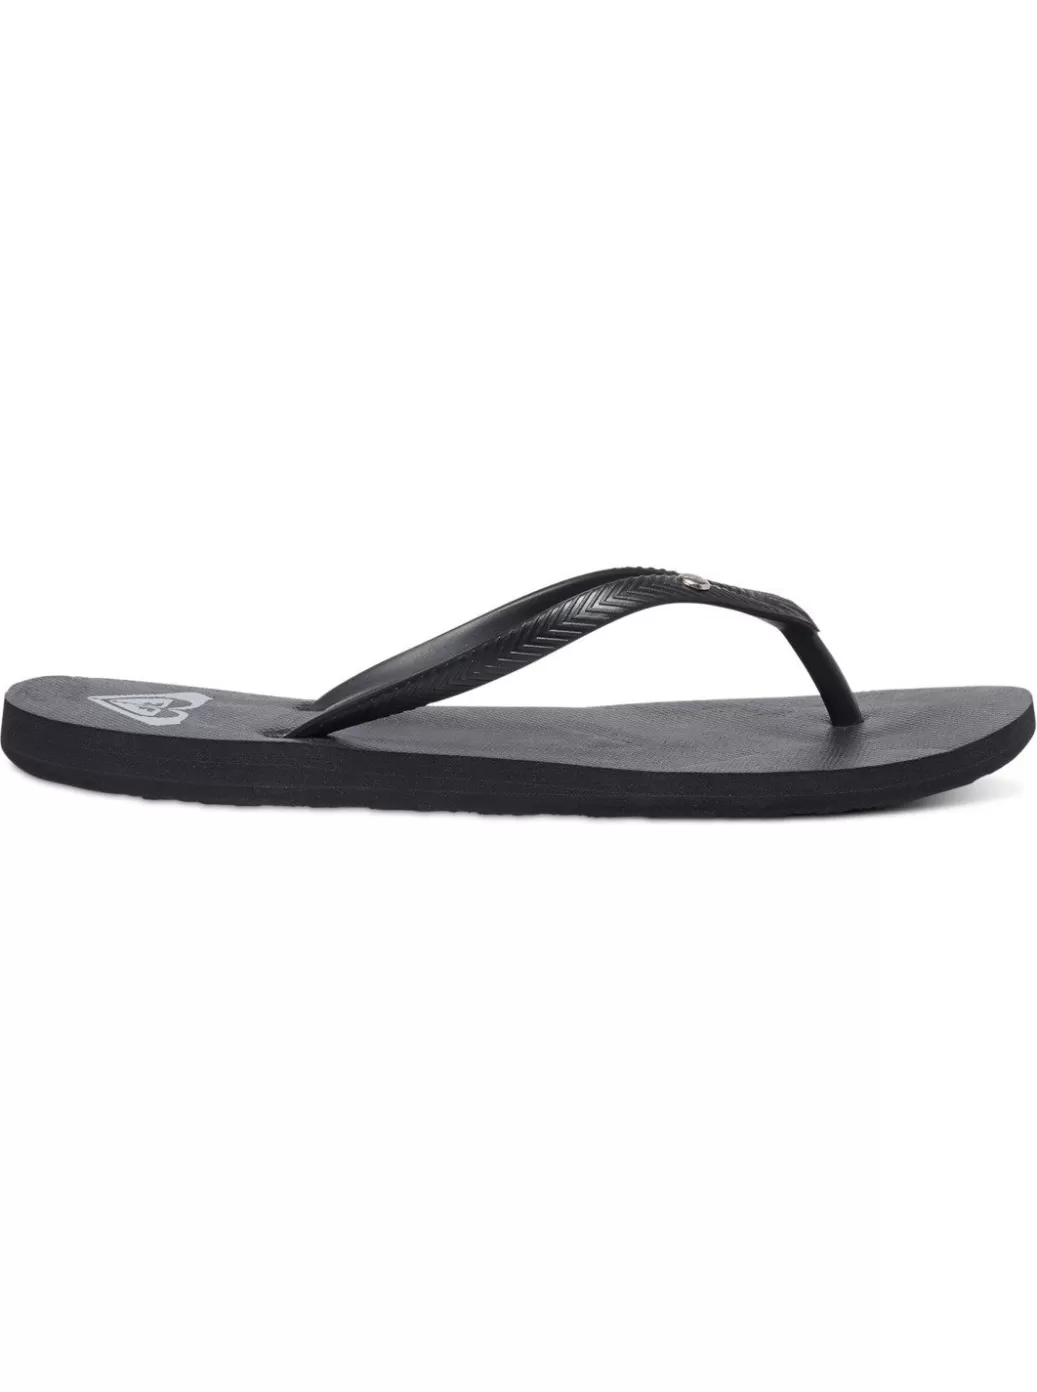 Flip Flops | WOMEN ROXY Bermuda Sandals Black 3